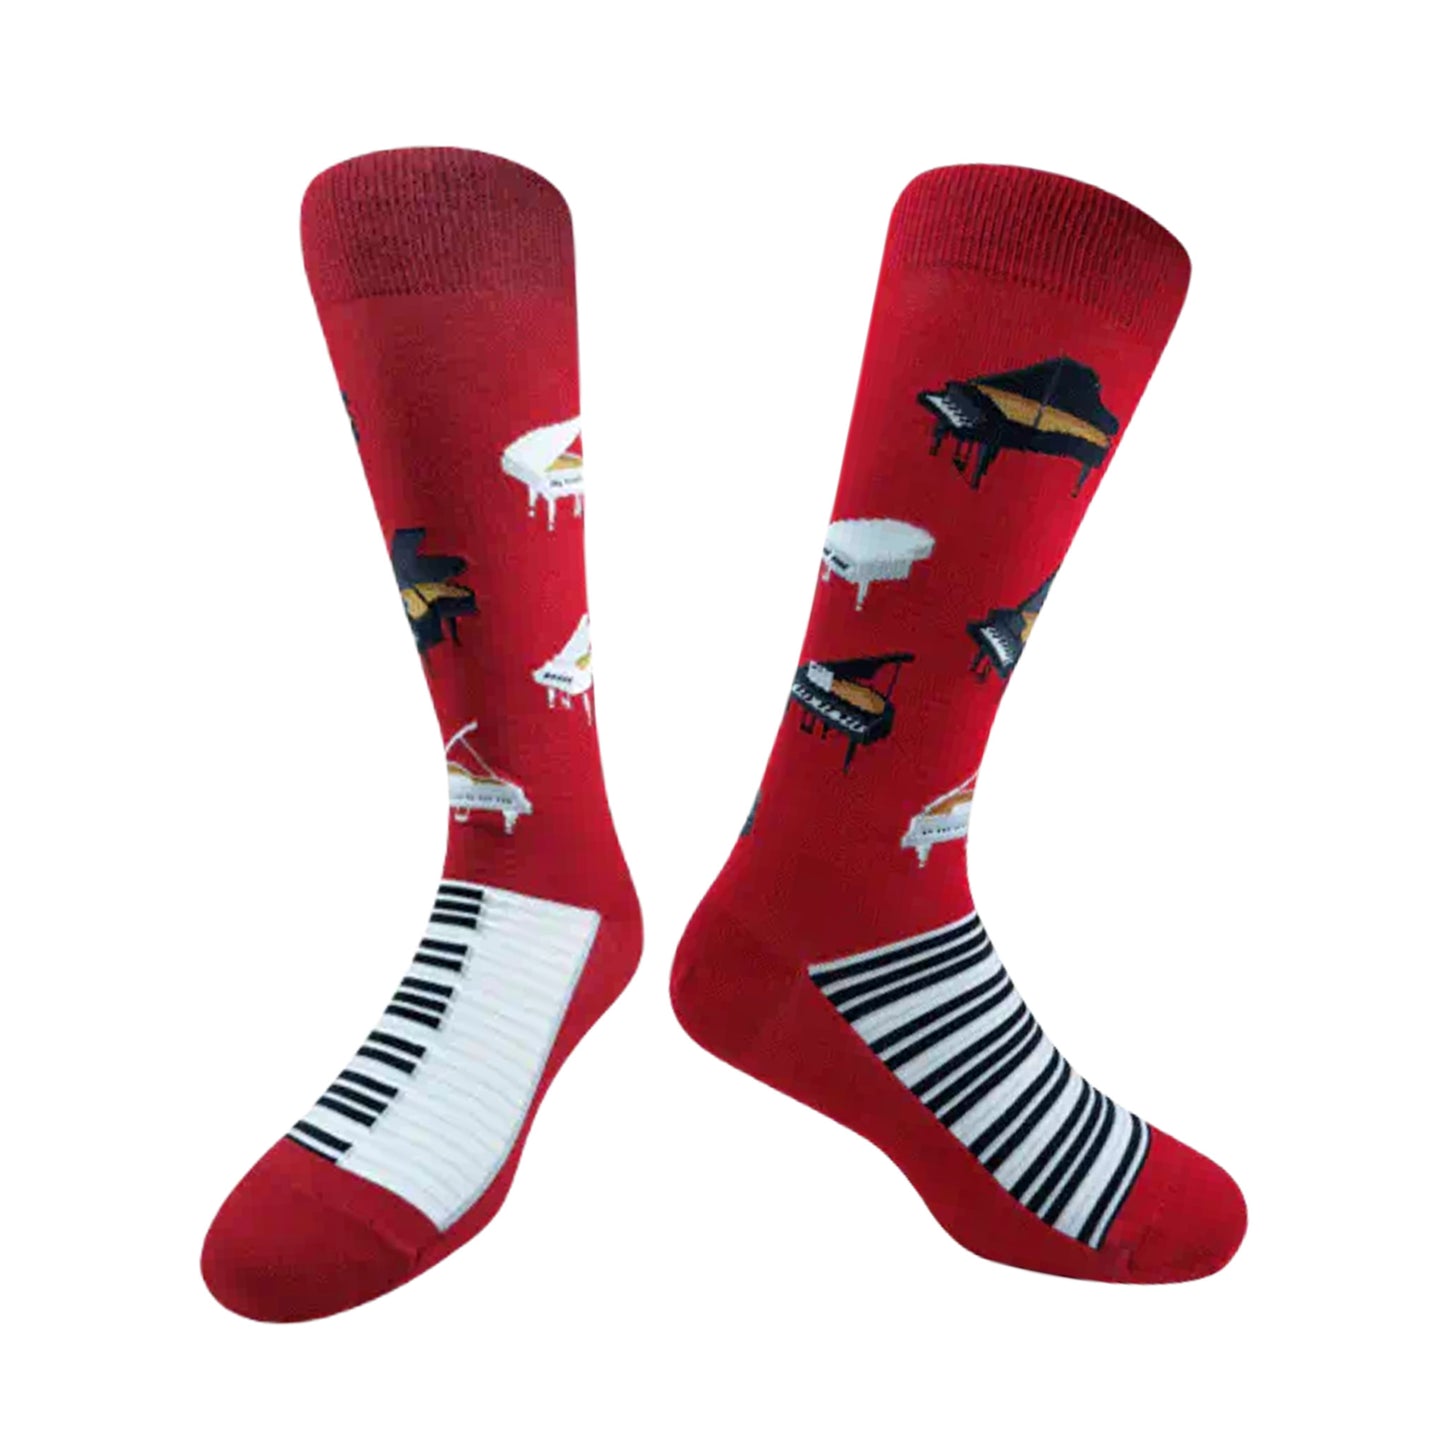 Grand Pianos Men’s Socks, Red